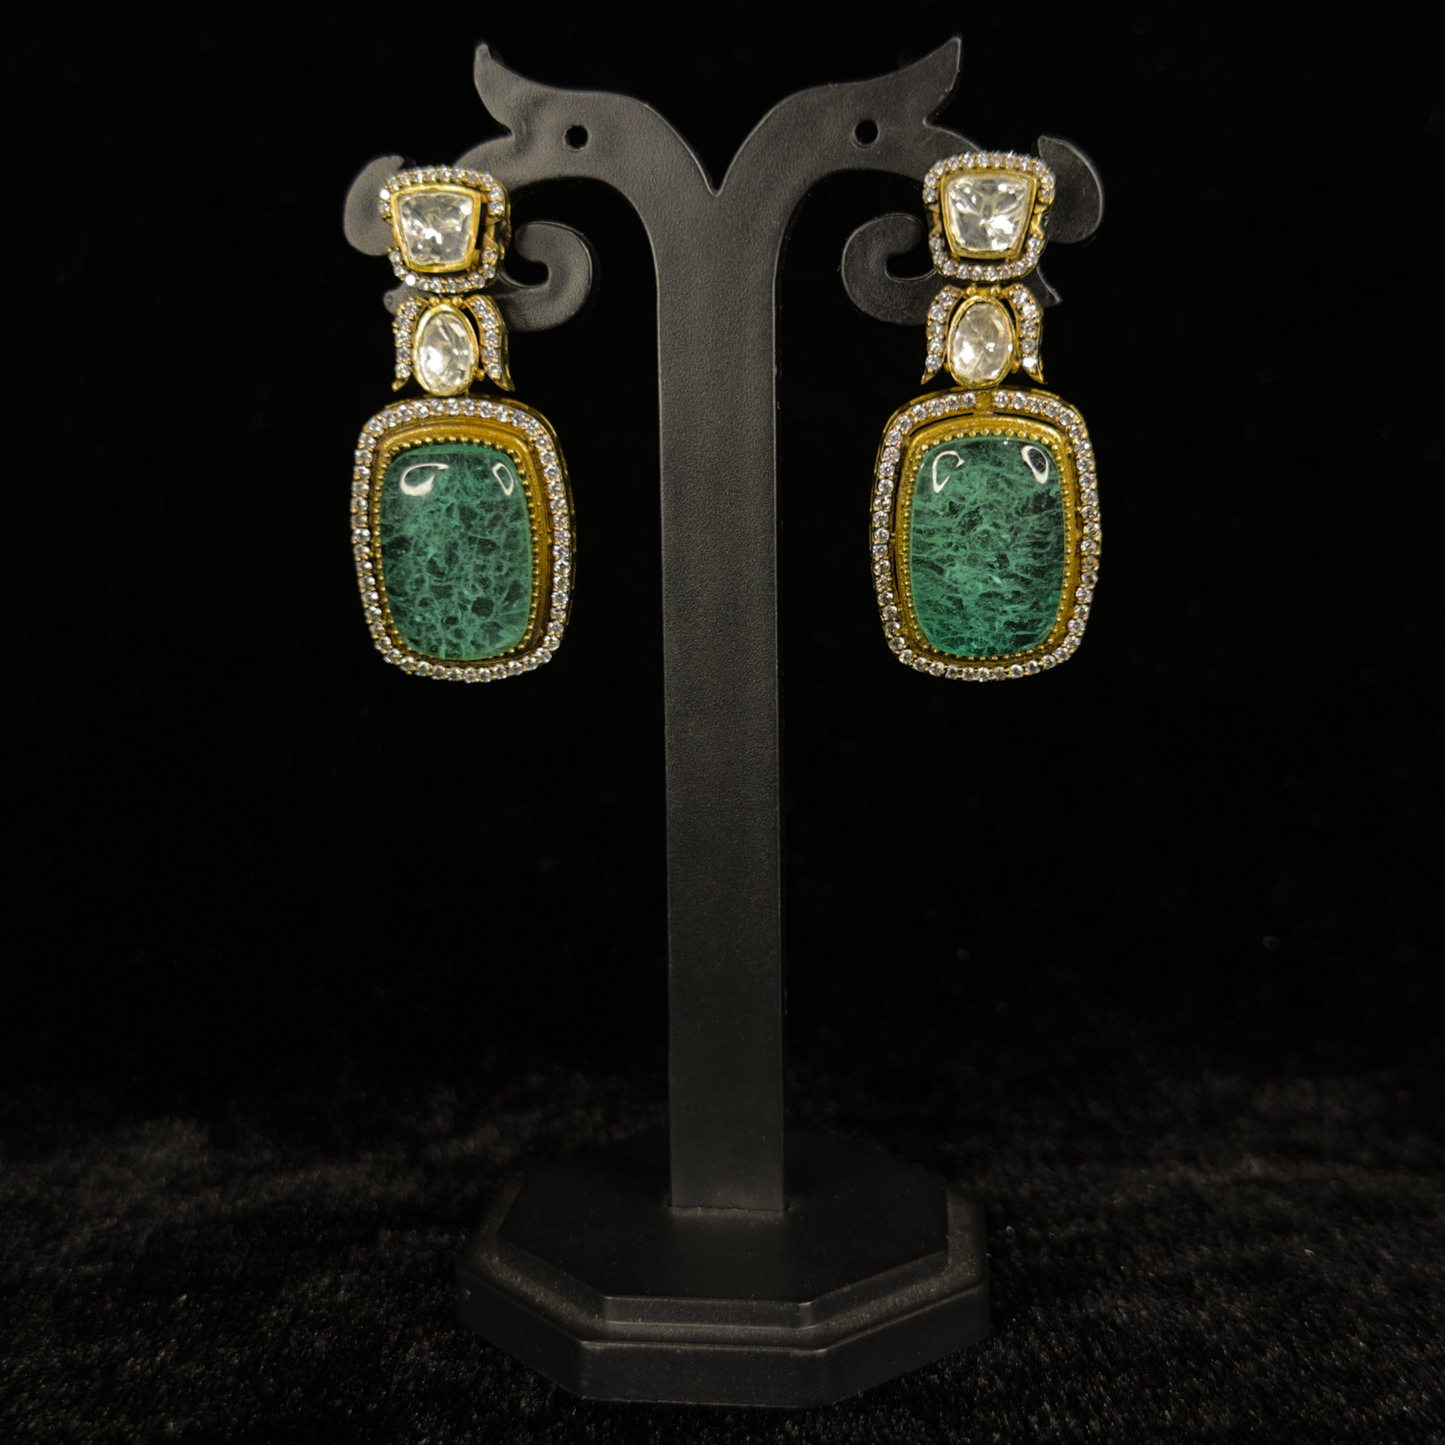 Premium Two-Step Victorian Necklace Set in Mint colour